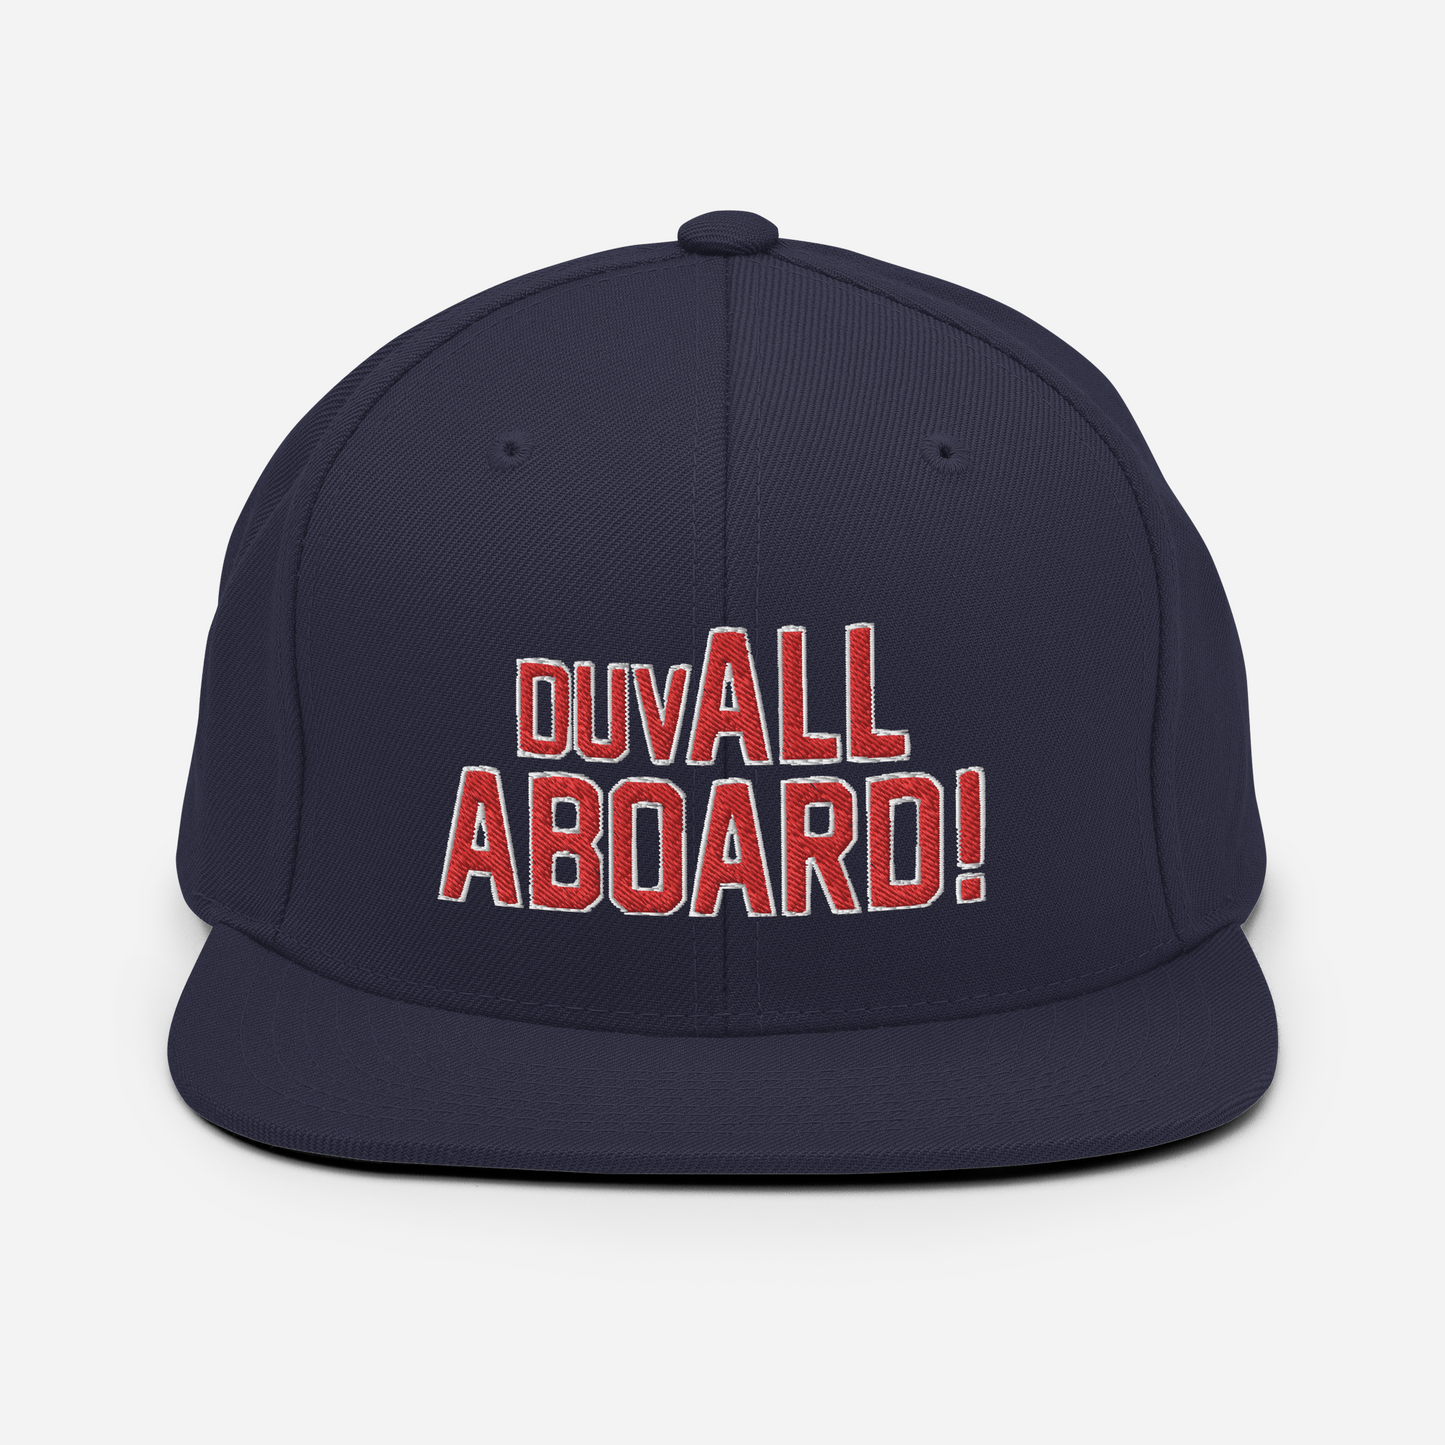 Adam Duvall "DuvALL Aboard" Snapback Hat